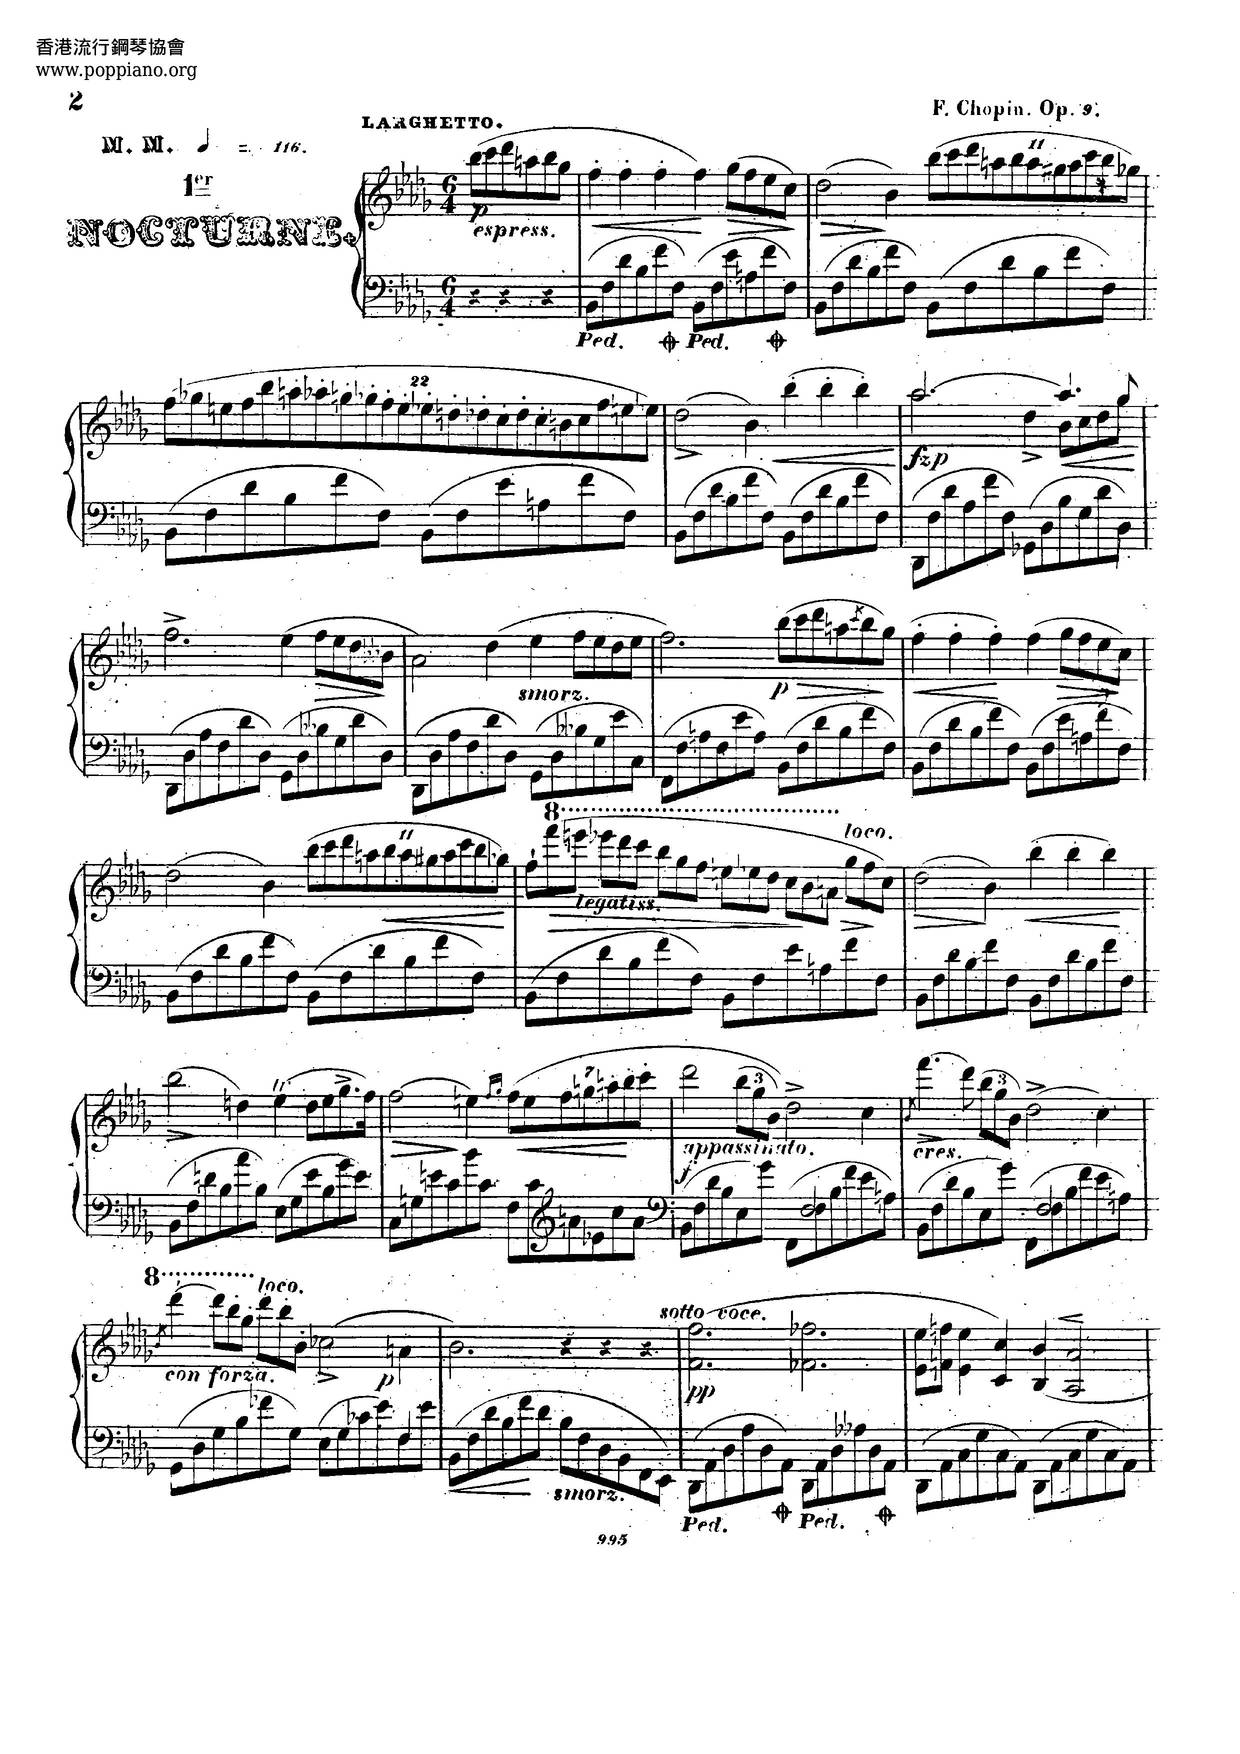 Chopin - The Complete Nocturnes Score